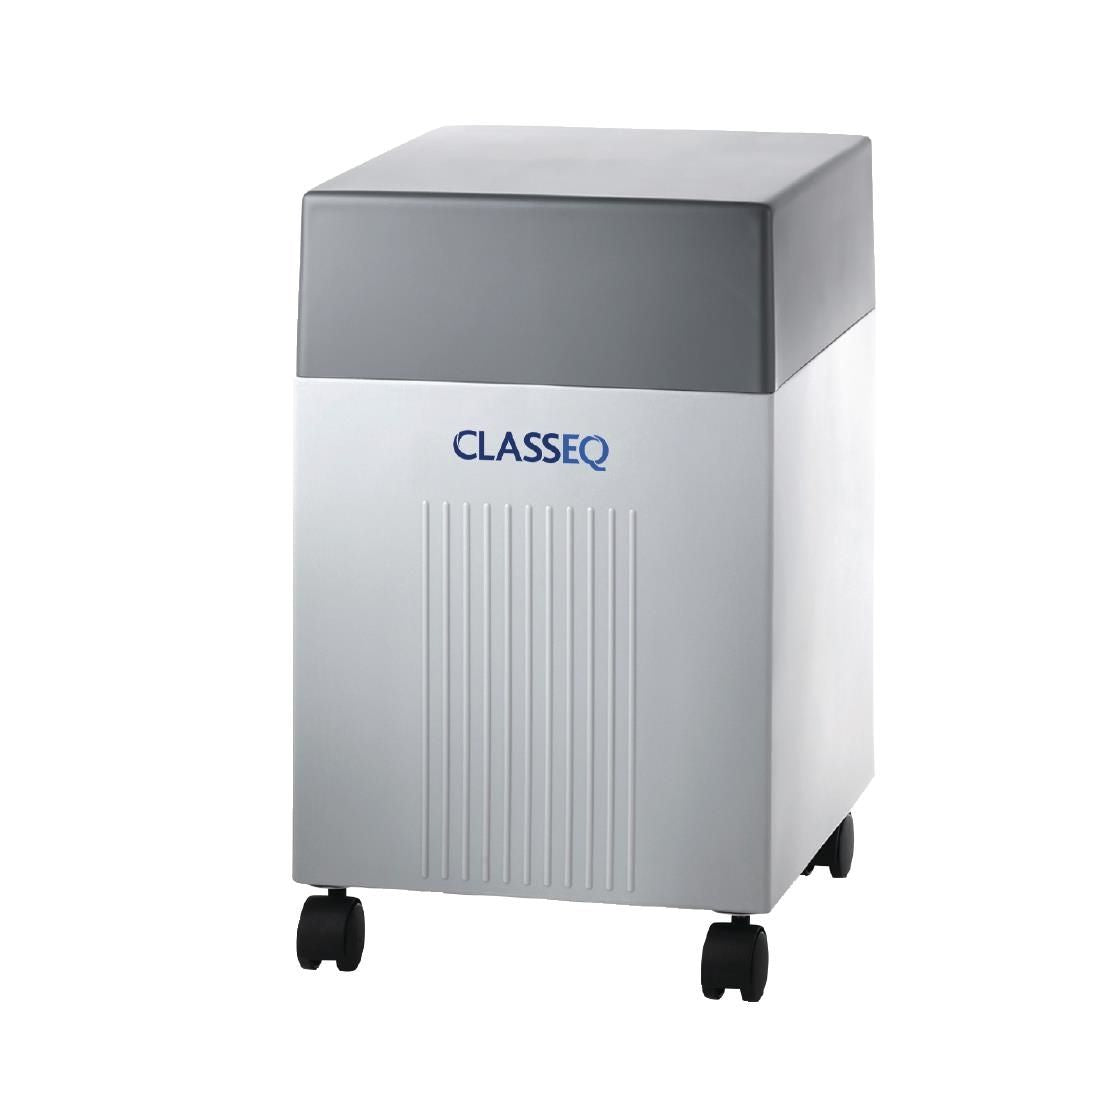 FB156 Classeq Automatic Hot Feed External Water Softener DuoMatik 3 JD Catering Equipment Solutions Ltd